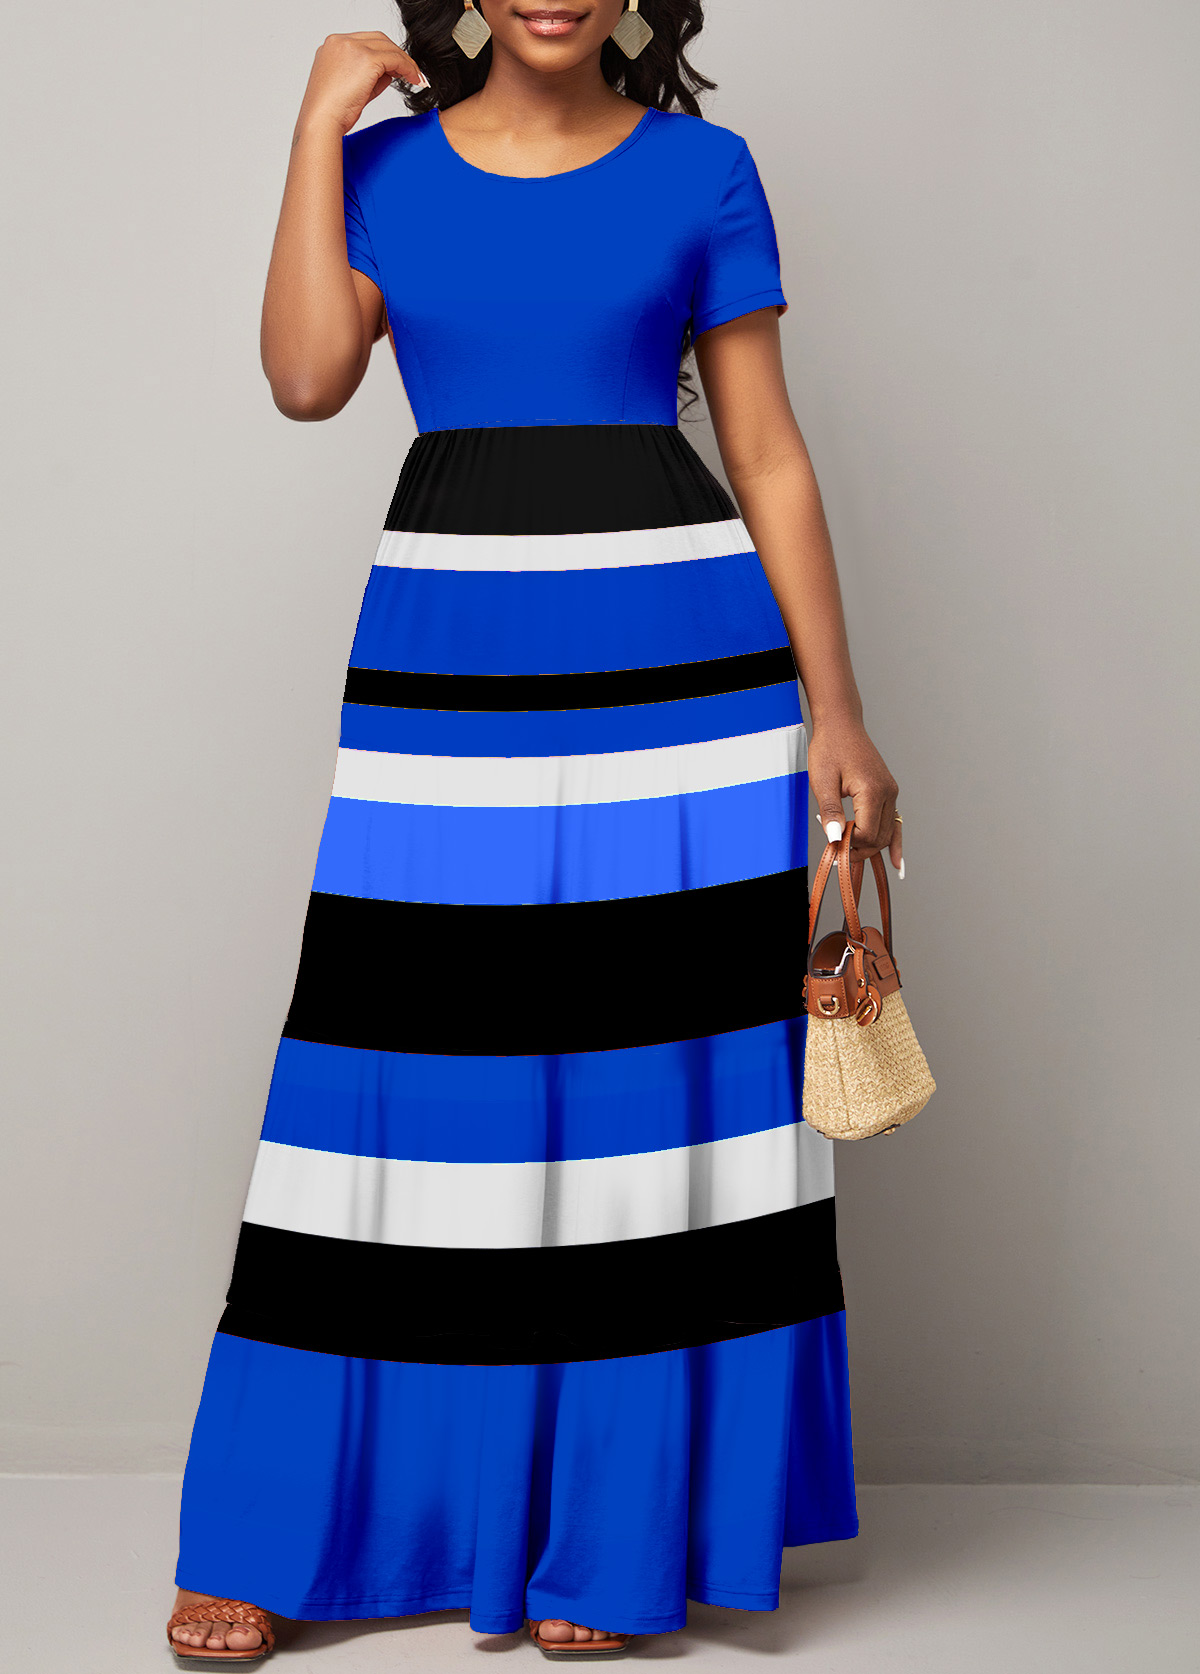 Striped Royal Blue Short Sleeve Dress